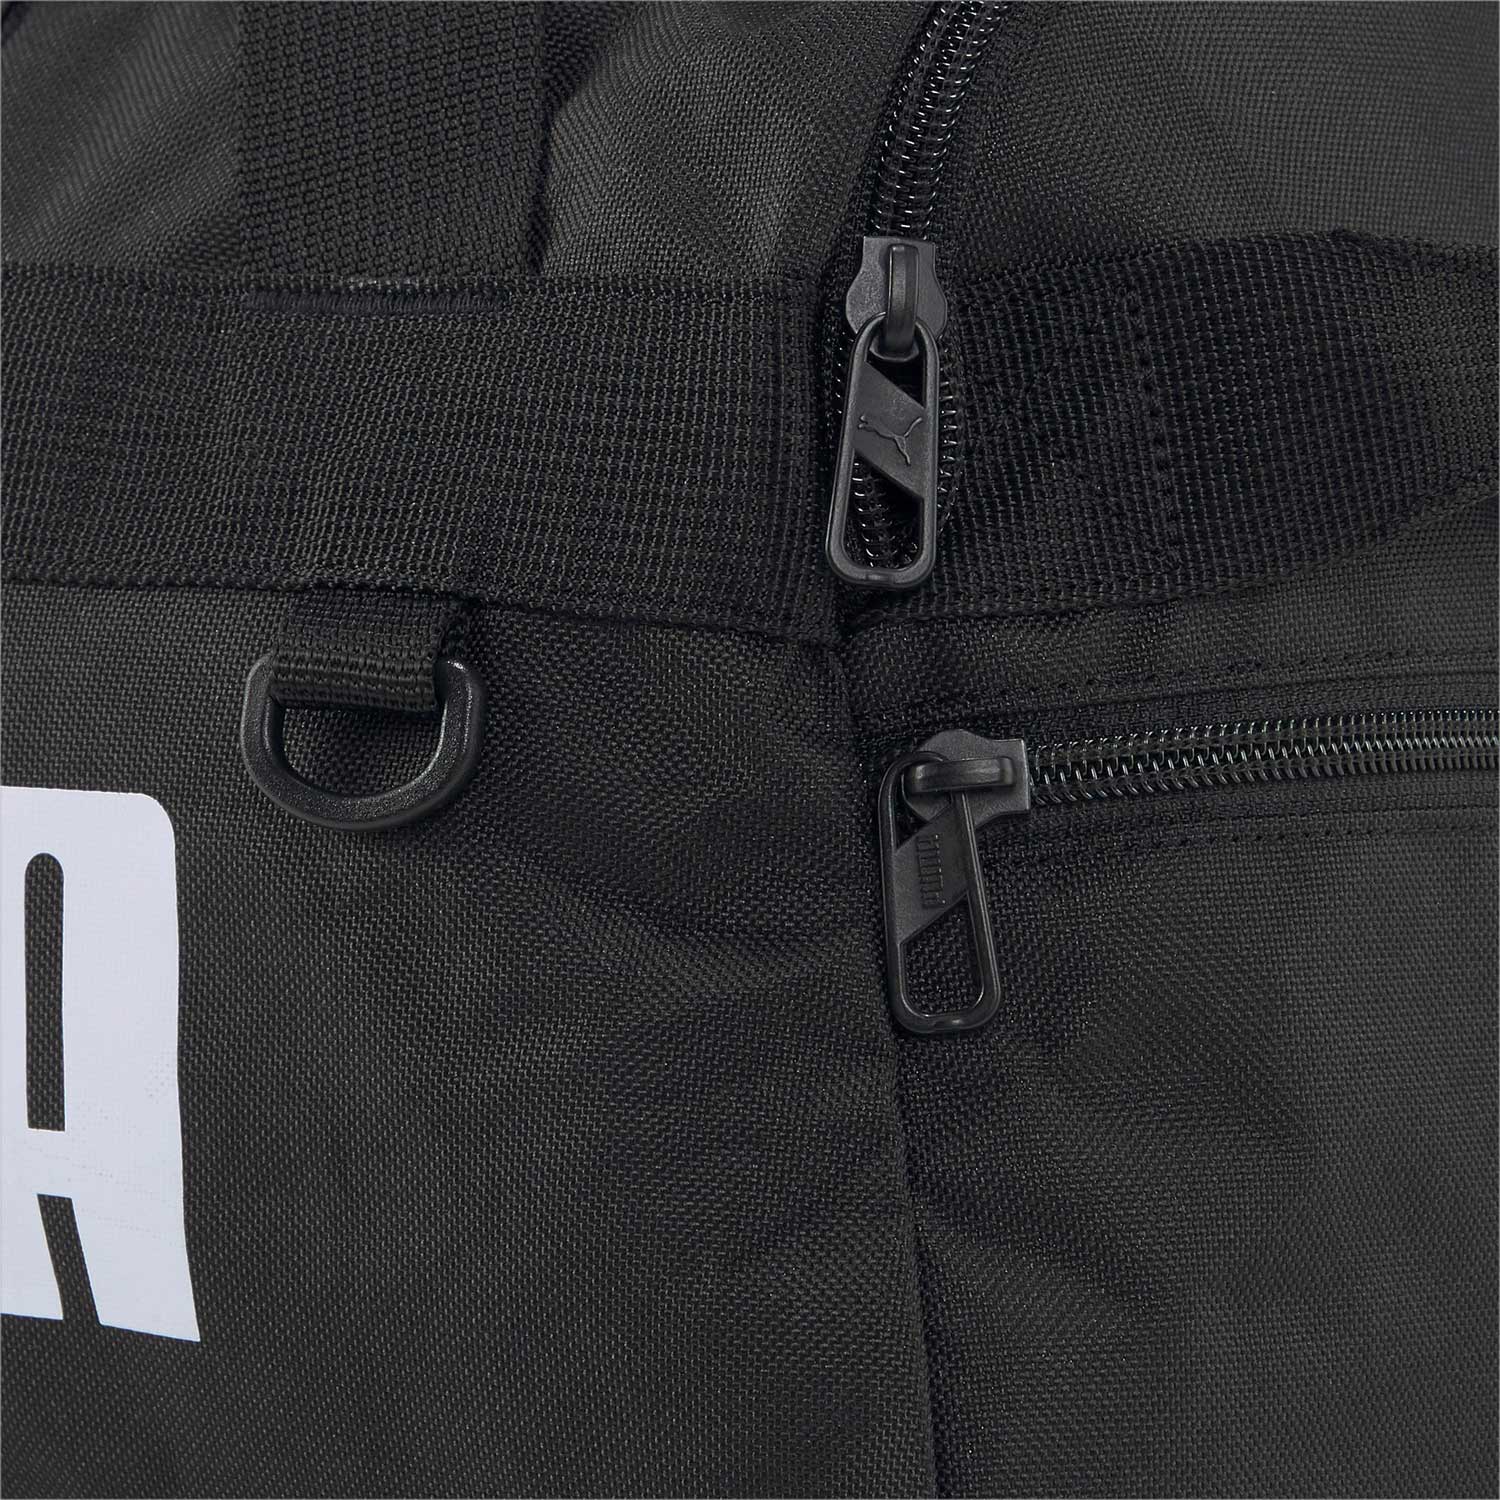 Puma Duffel Bag XS Challenger Black